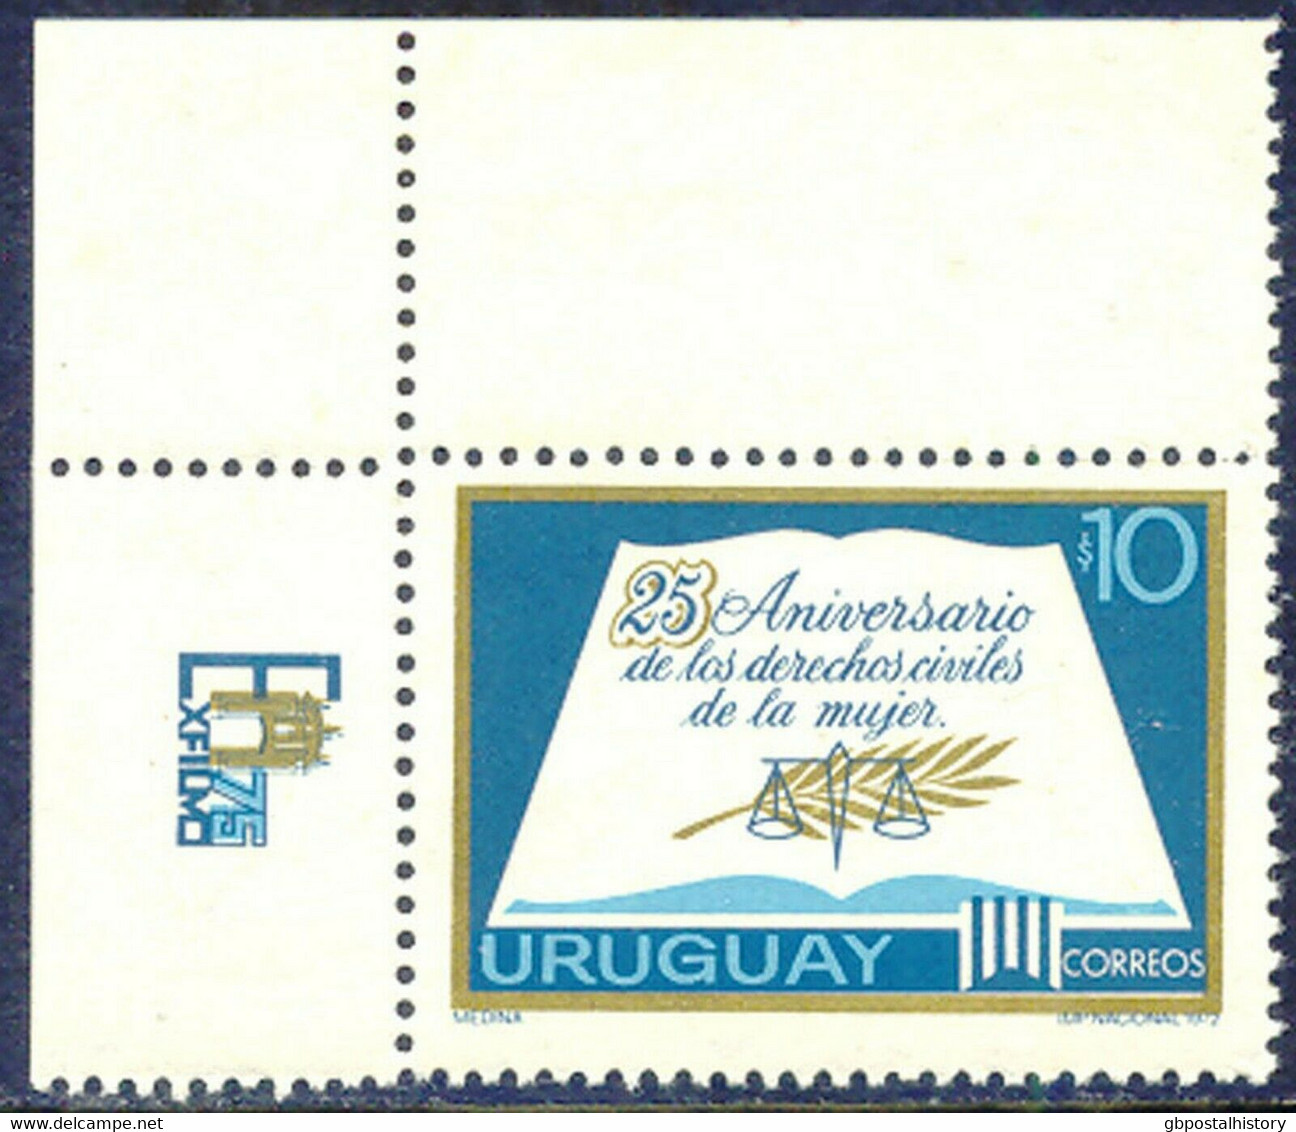 URUGUAY 1972 25 Years Women Civil Law 10 P. U/M MAJOR VARIETY MISSING COLOR BLUE - Uruguay